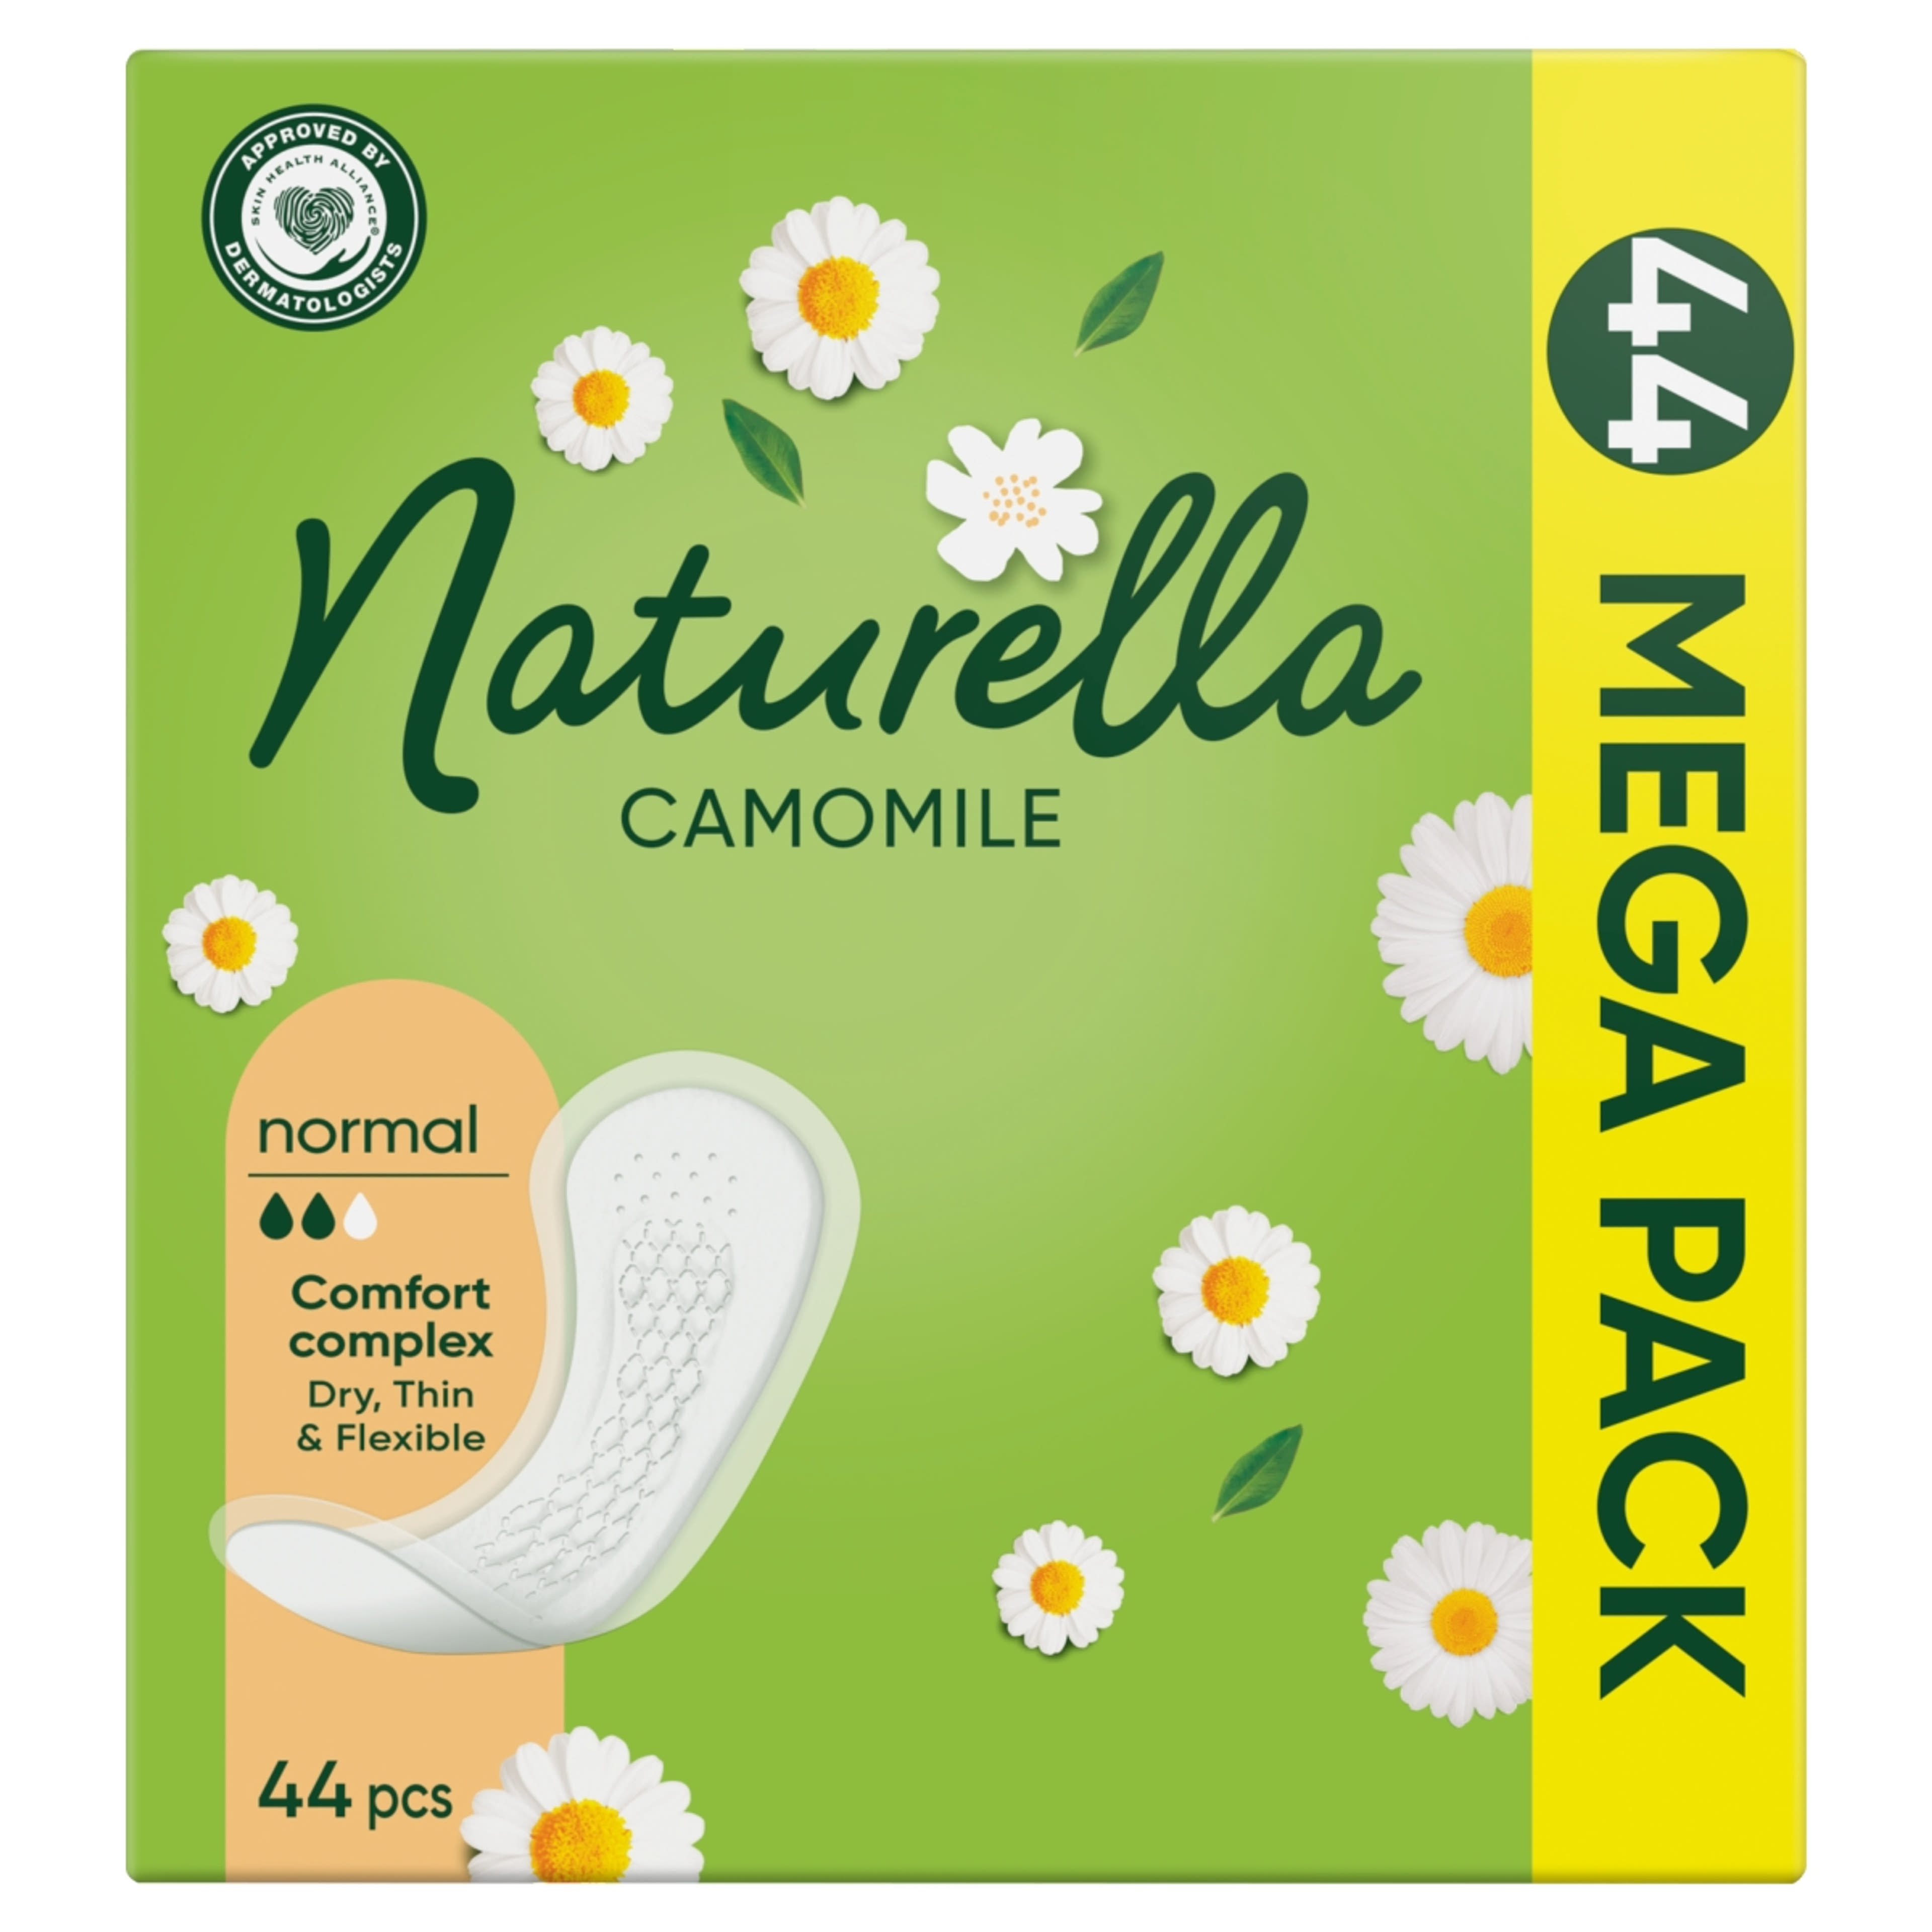 Naturella tisztasági betét regular chamomile - 44 db